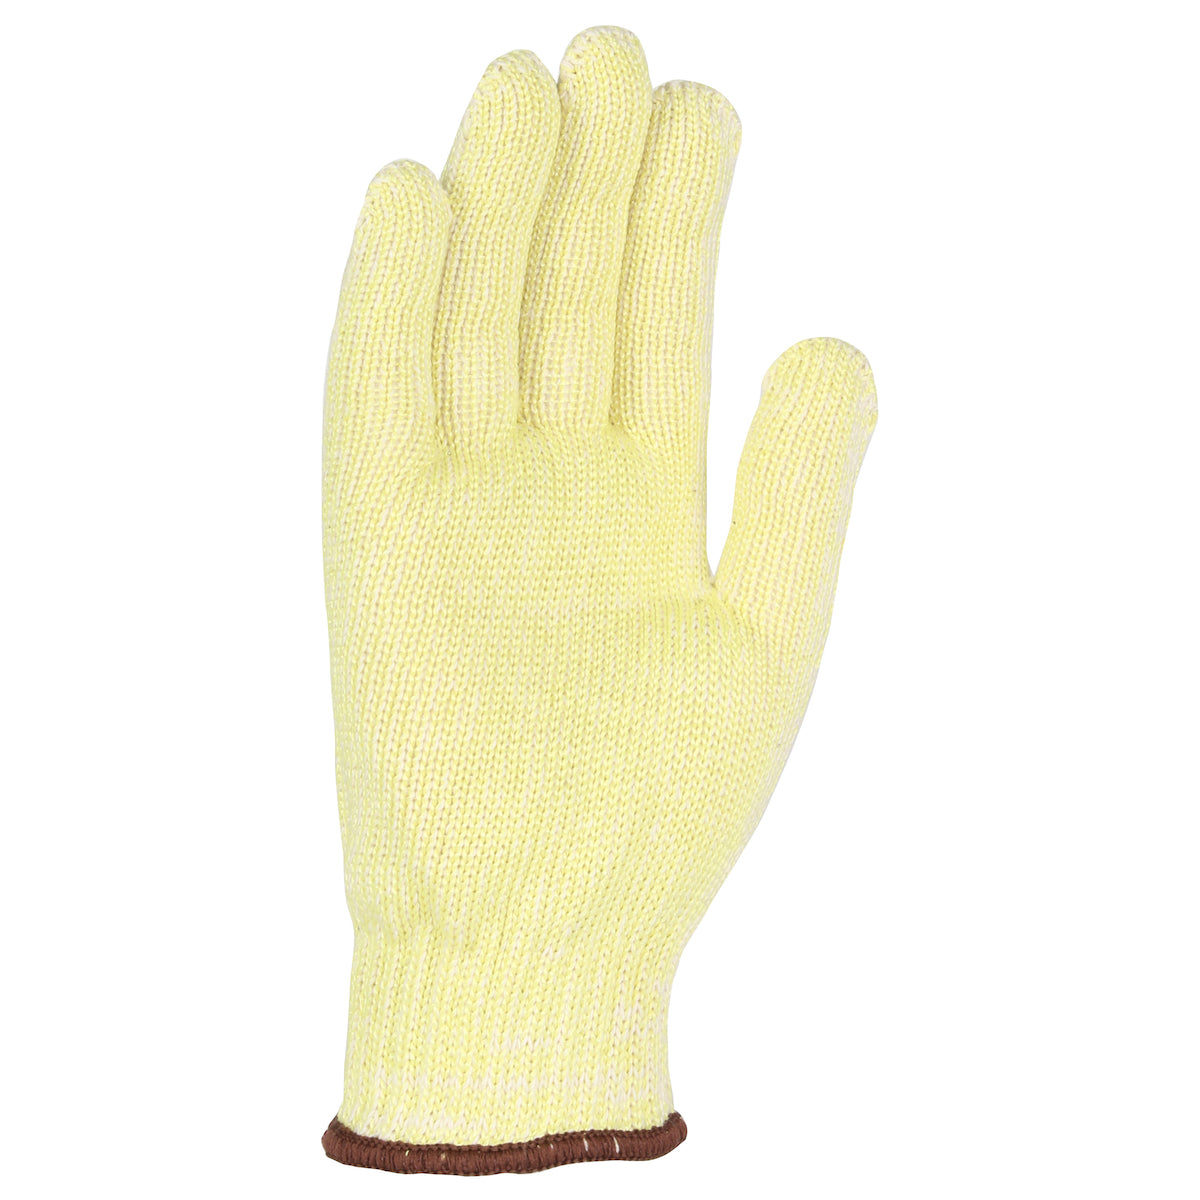 WPP MATW55PL-XL Seamless Knit Aramid / Cotton Blended Glove - Heavy Weight